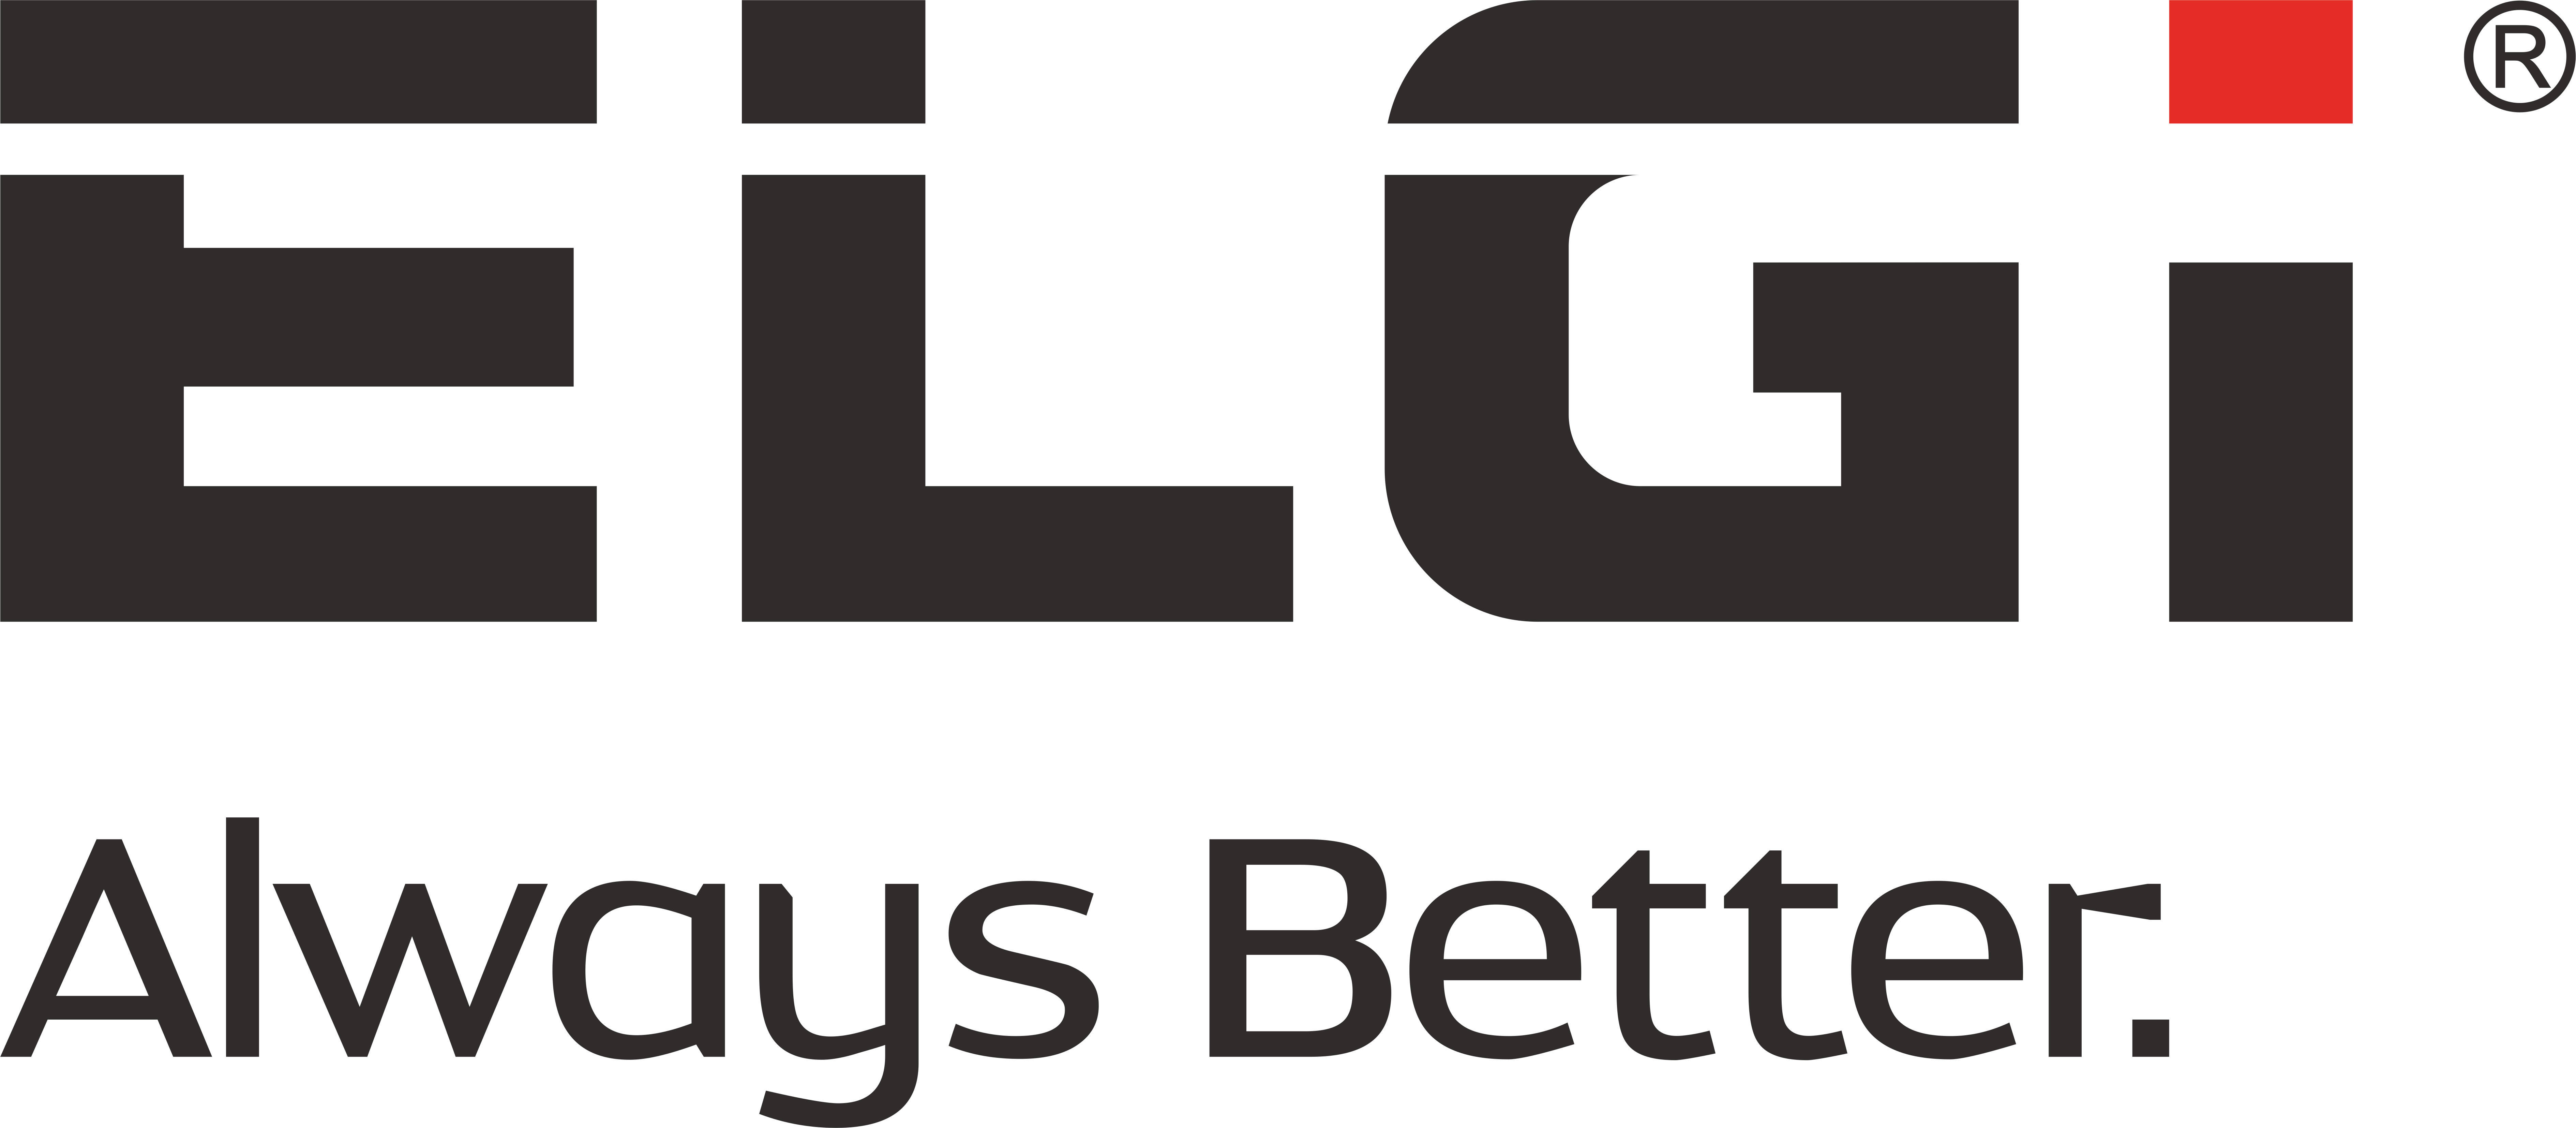 ELGi Logo